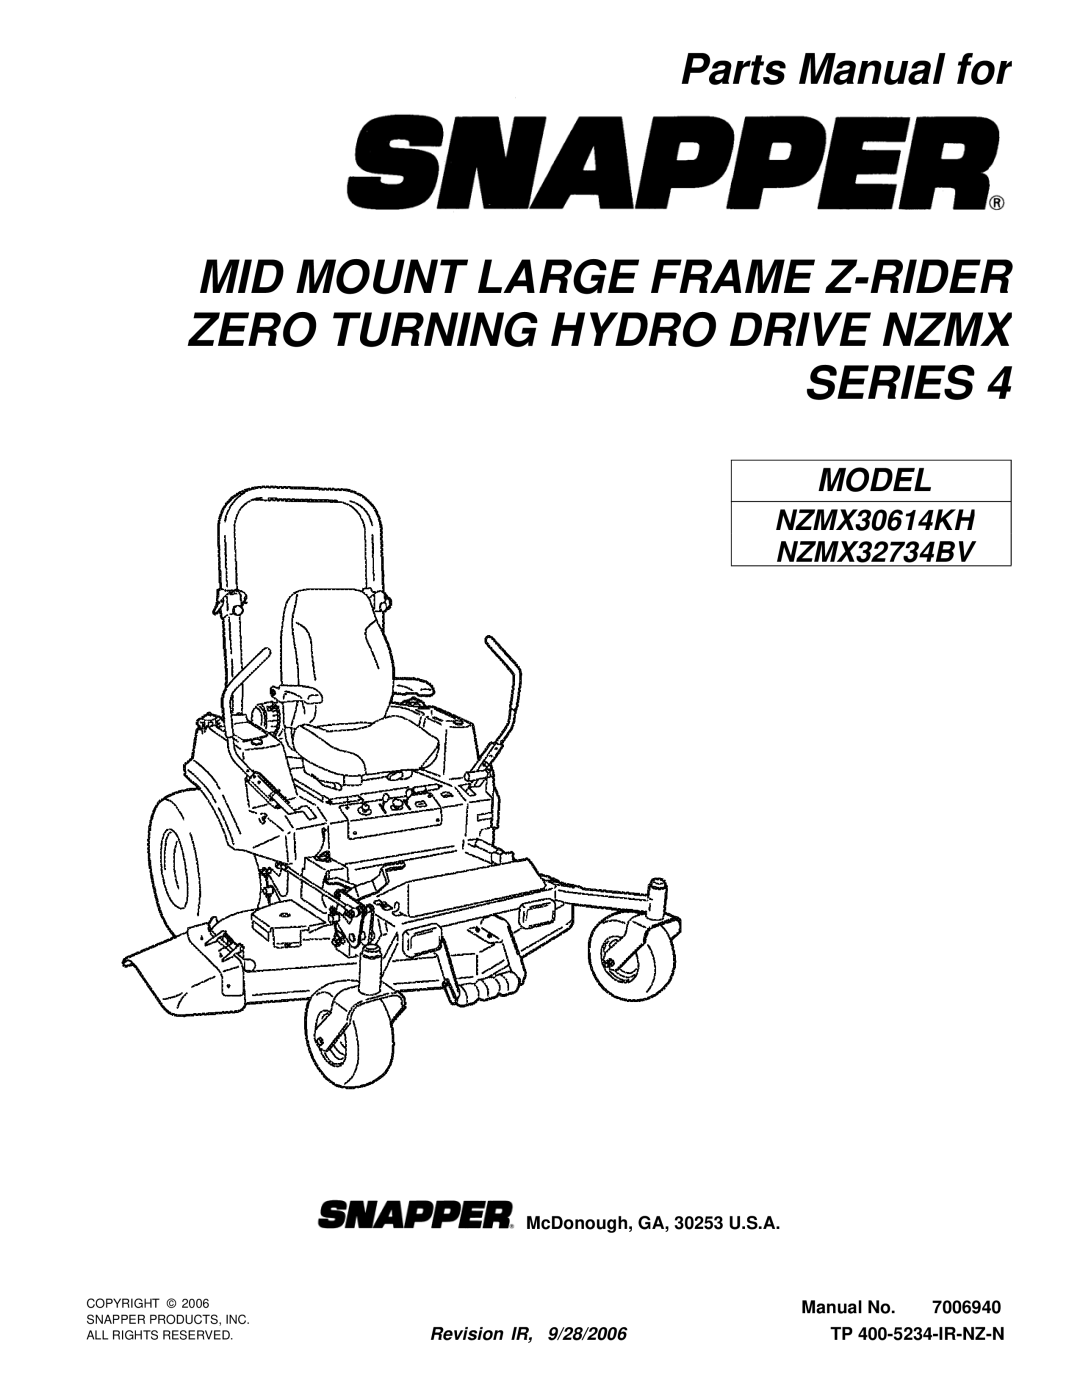 Snapper NZMX30614KH, NZMX32734BV manual Parts Manual for 